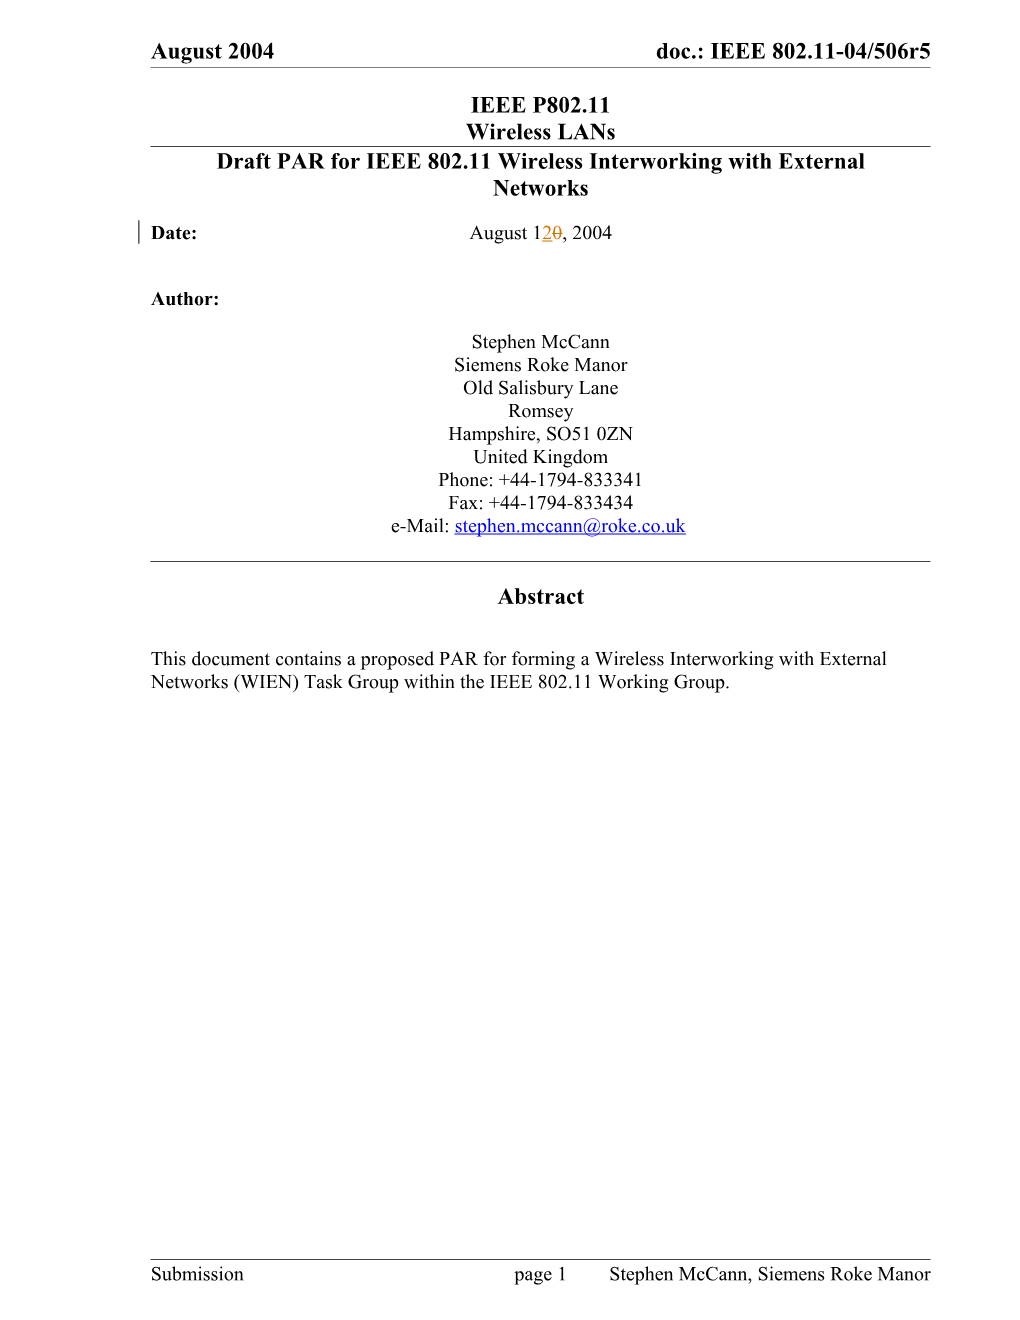 Draft PAR for IEEE 802.11 Wireless Interworking with External Networks